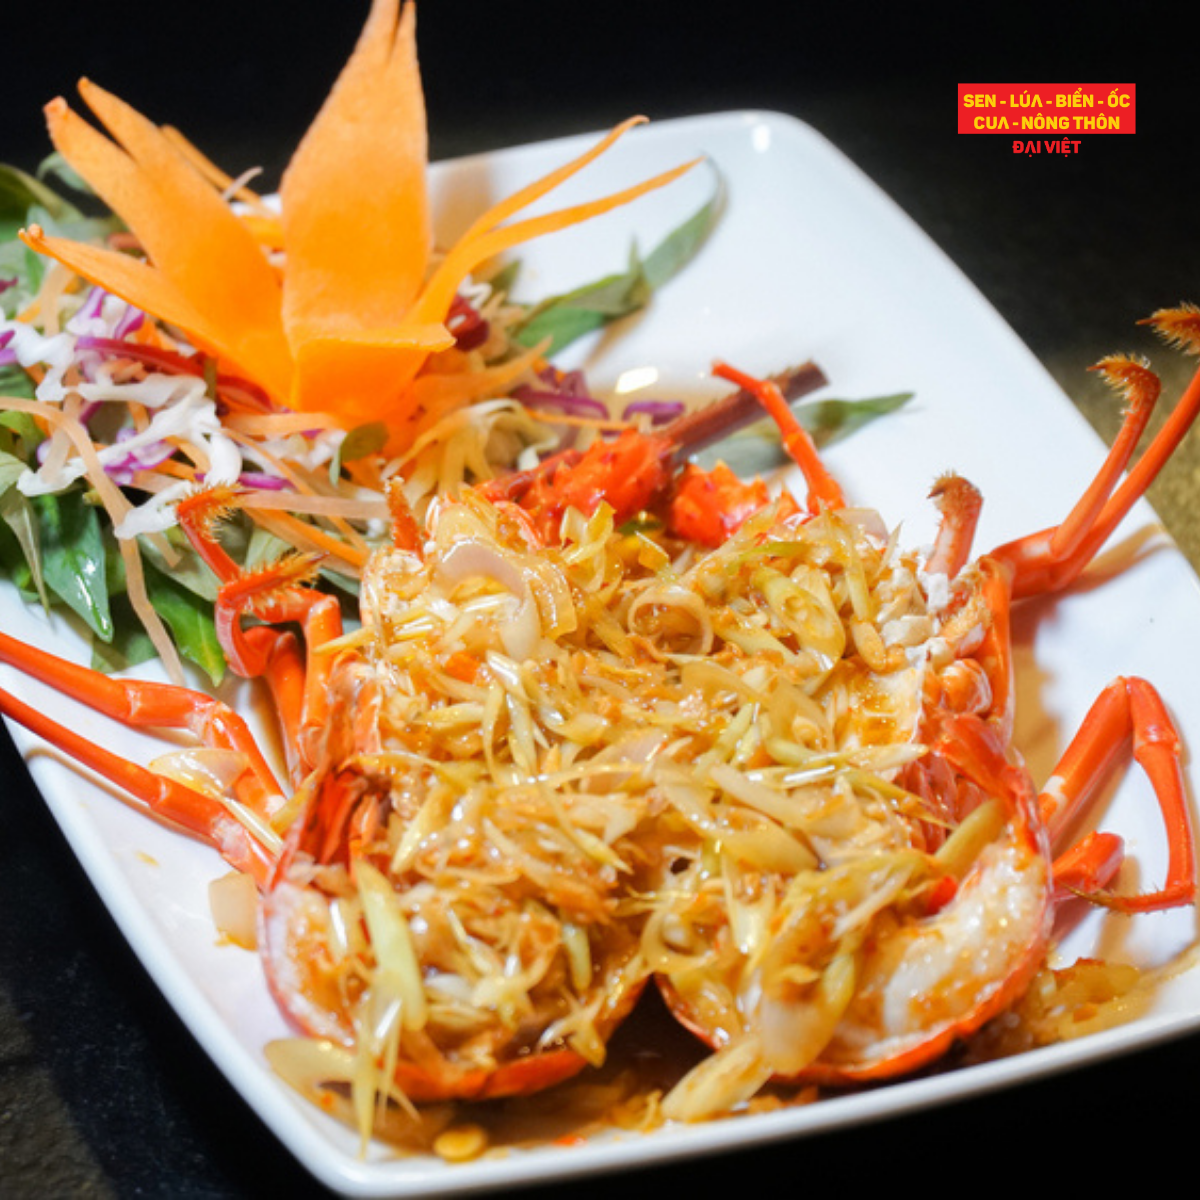  Pan-fried Baby Lobster With Lua Dai Viet Sauce - Tôm Hùm Baby Sốt Lúa Đại Việt 